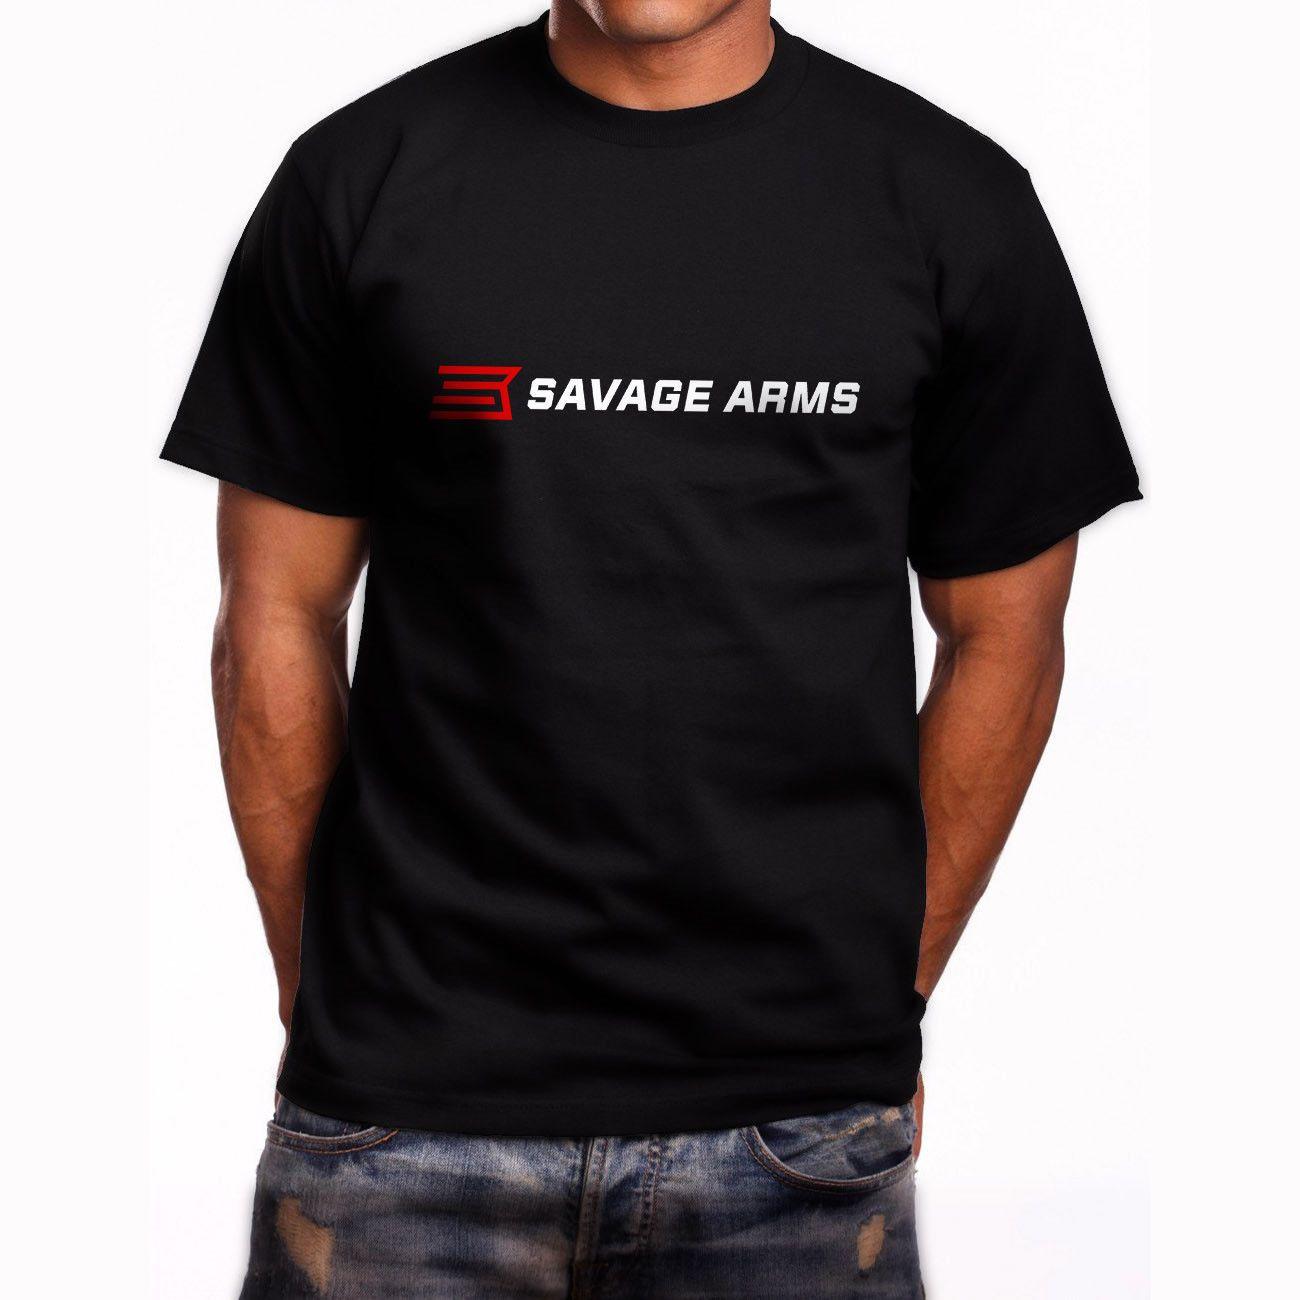 New Savage Arms Logo - New Savage Arms Logo Short Sleeve Men's Black T Shirt Size S to 5XL